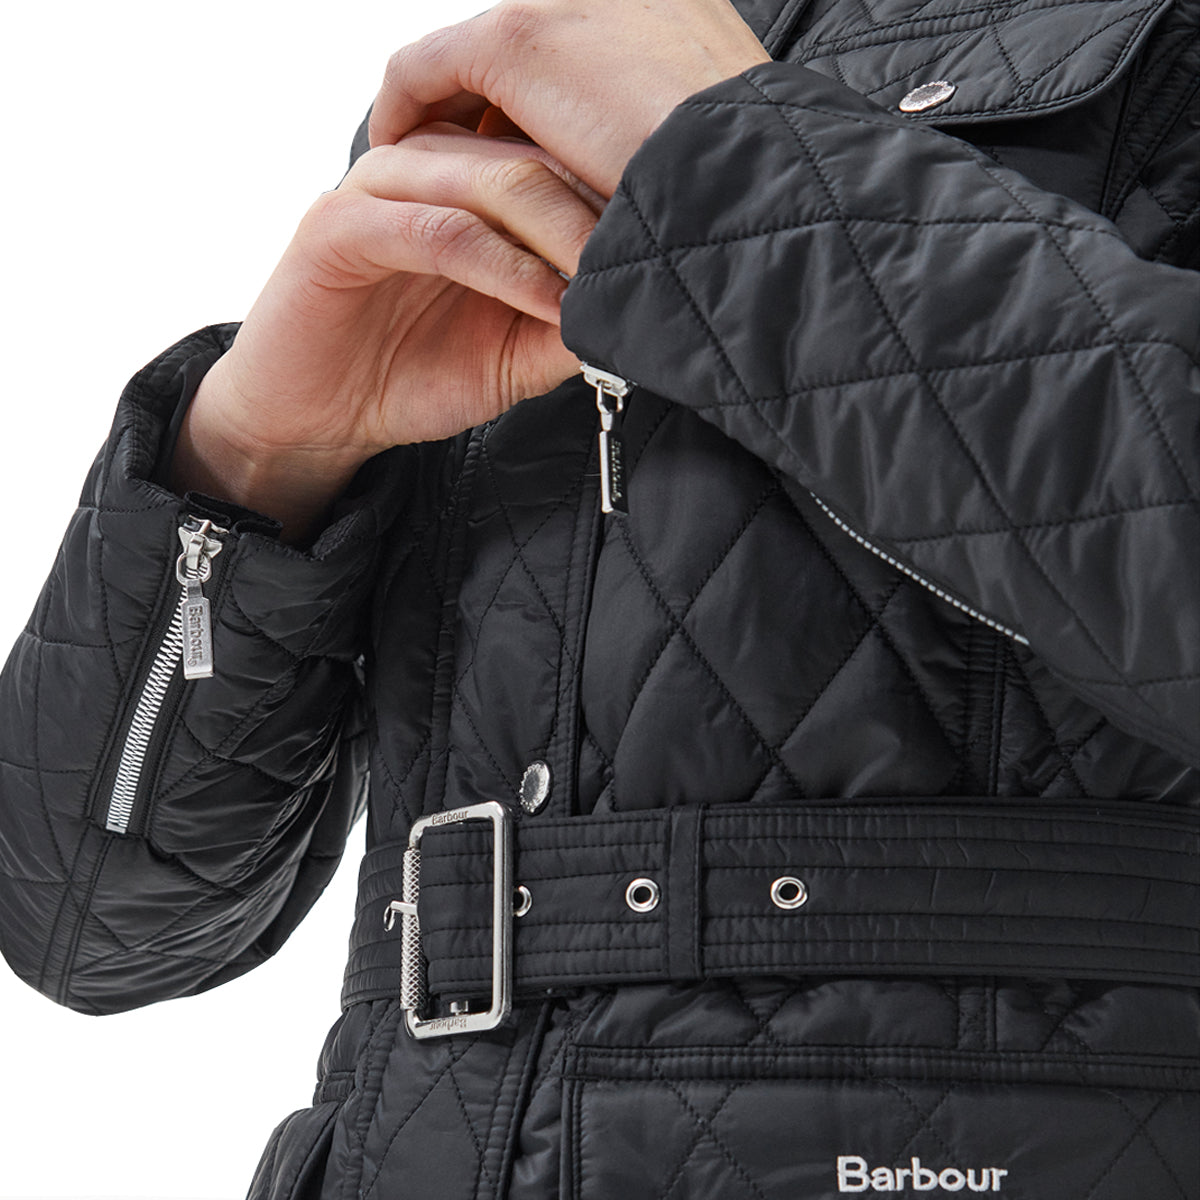 B.Intl Aubern Quilted Jacket in Black | Barbour